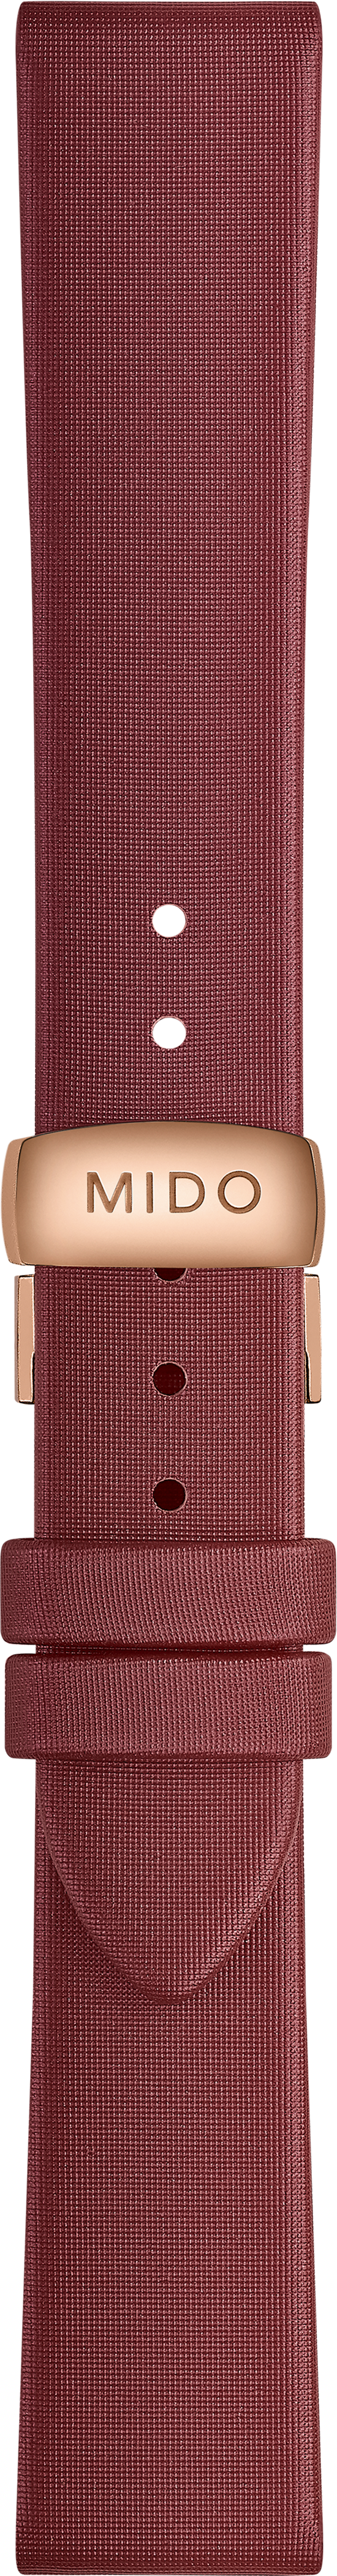 Mido Belluna red textile bracelet